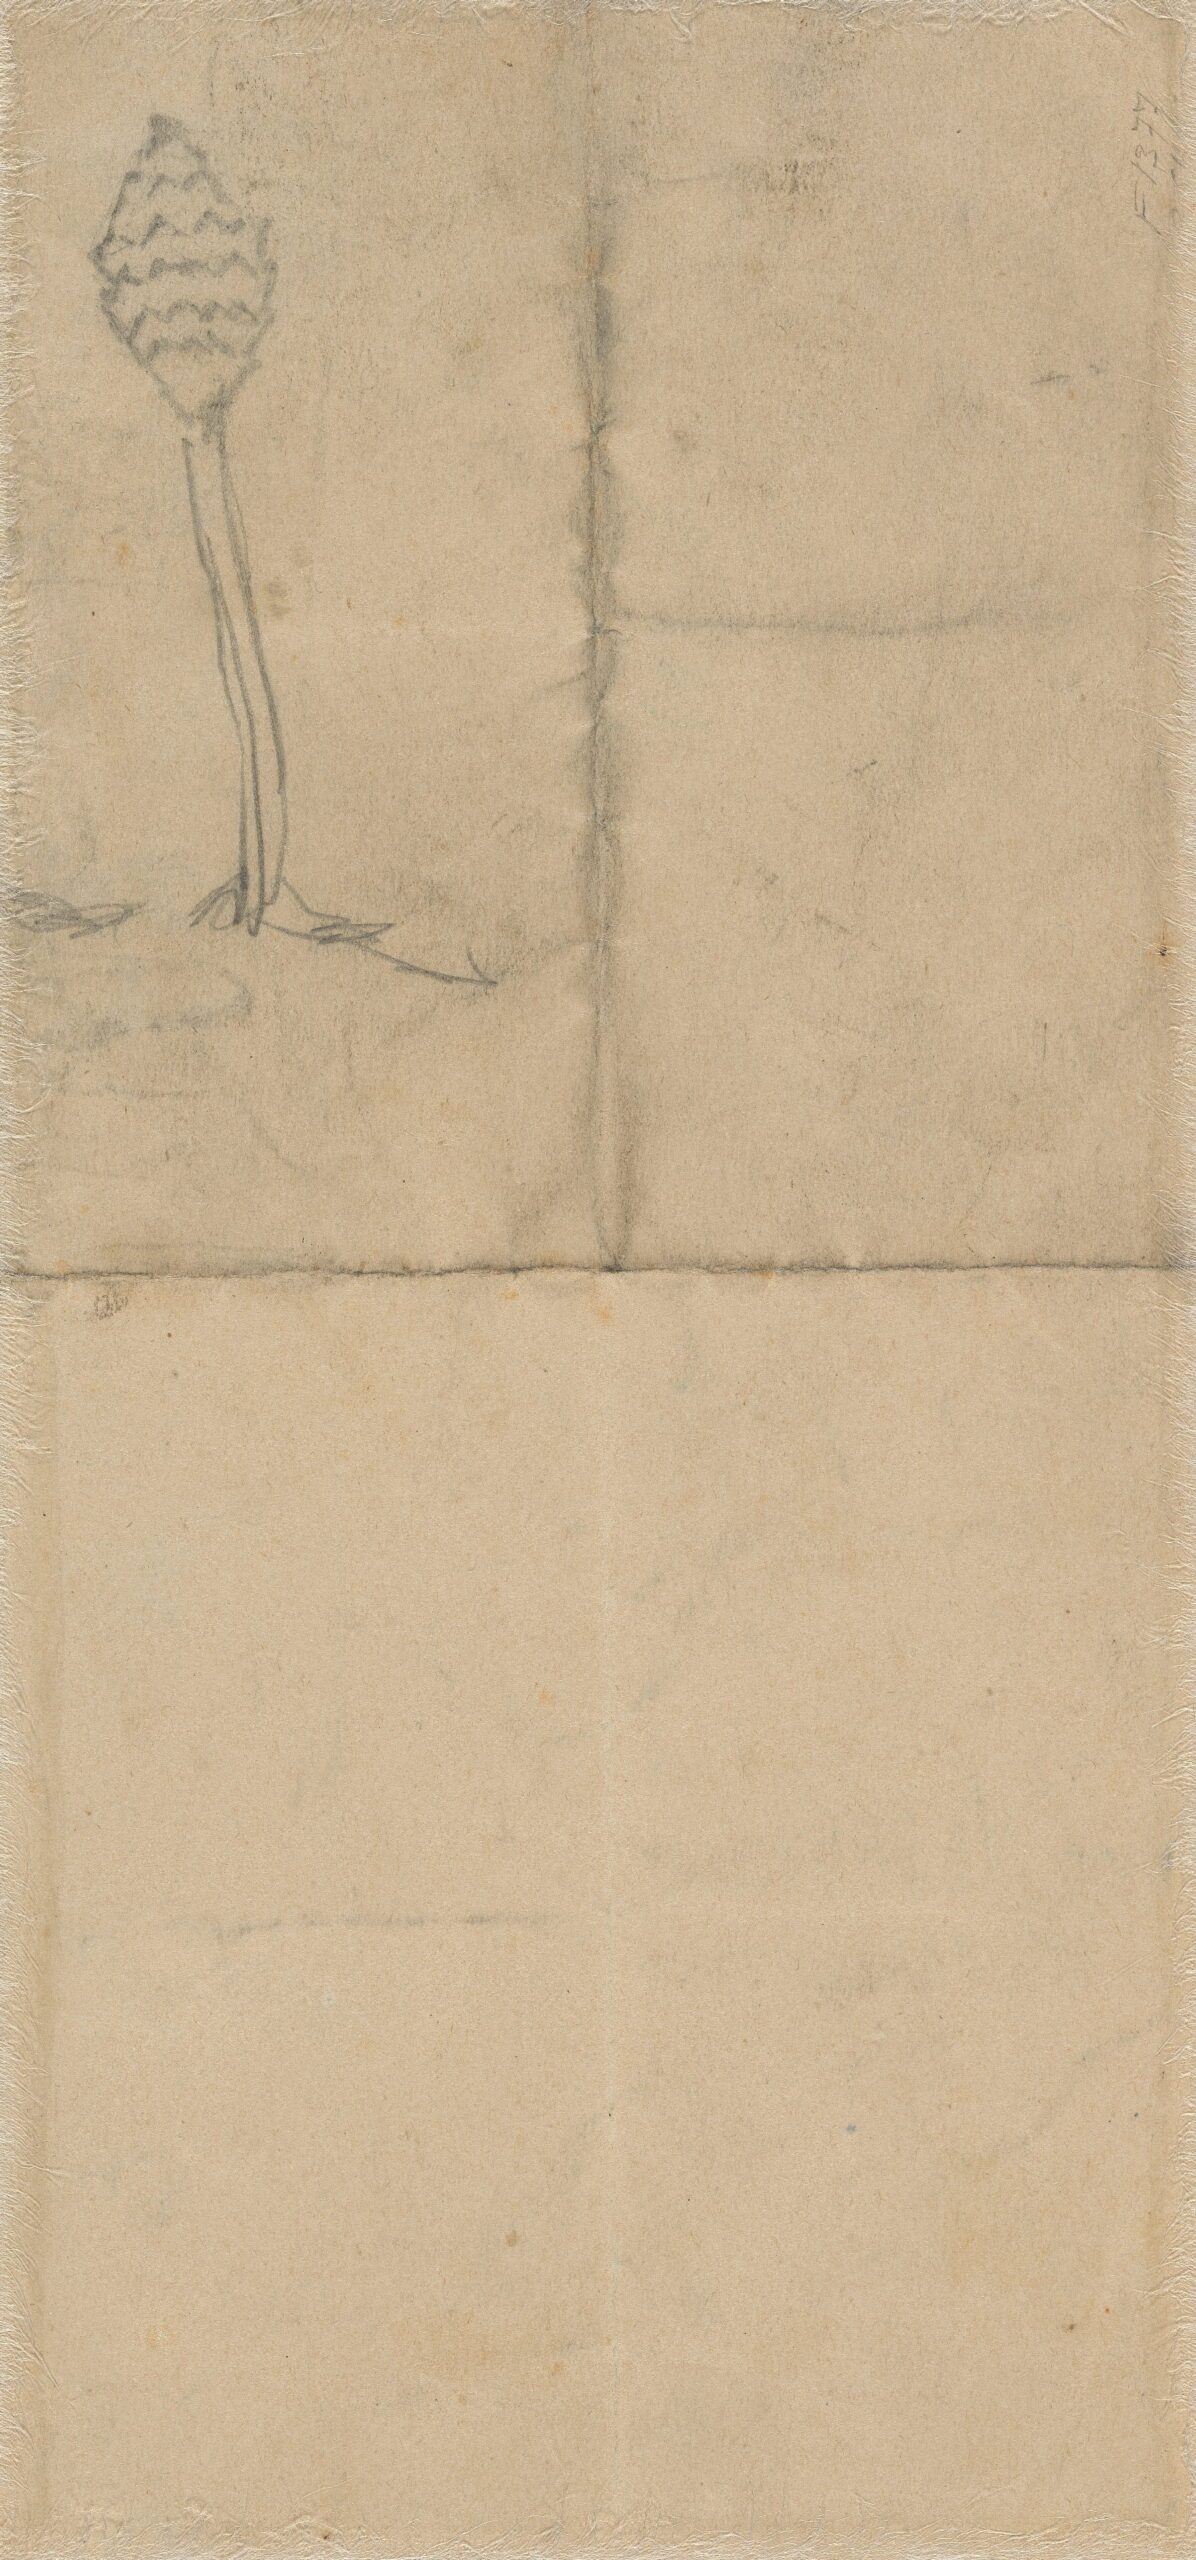 Geschubde inktzwam Vincent van Gogh (1853 - 1890), Parijs, april 1886